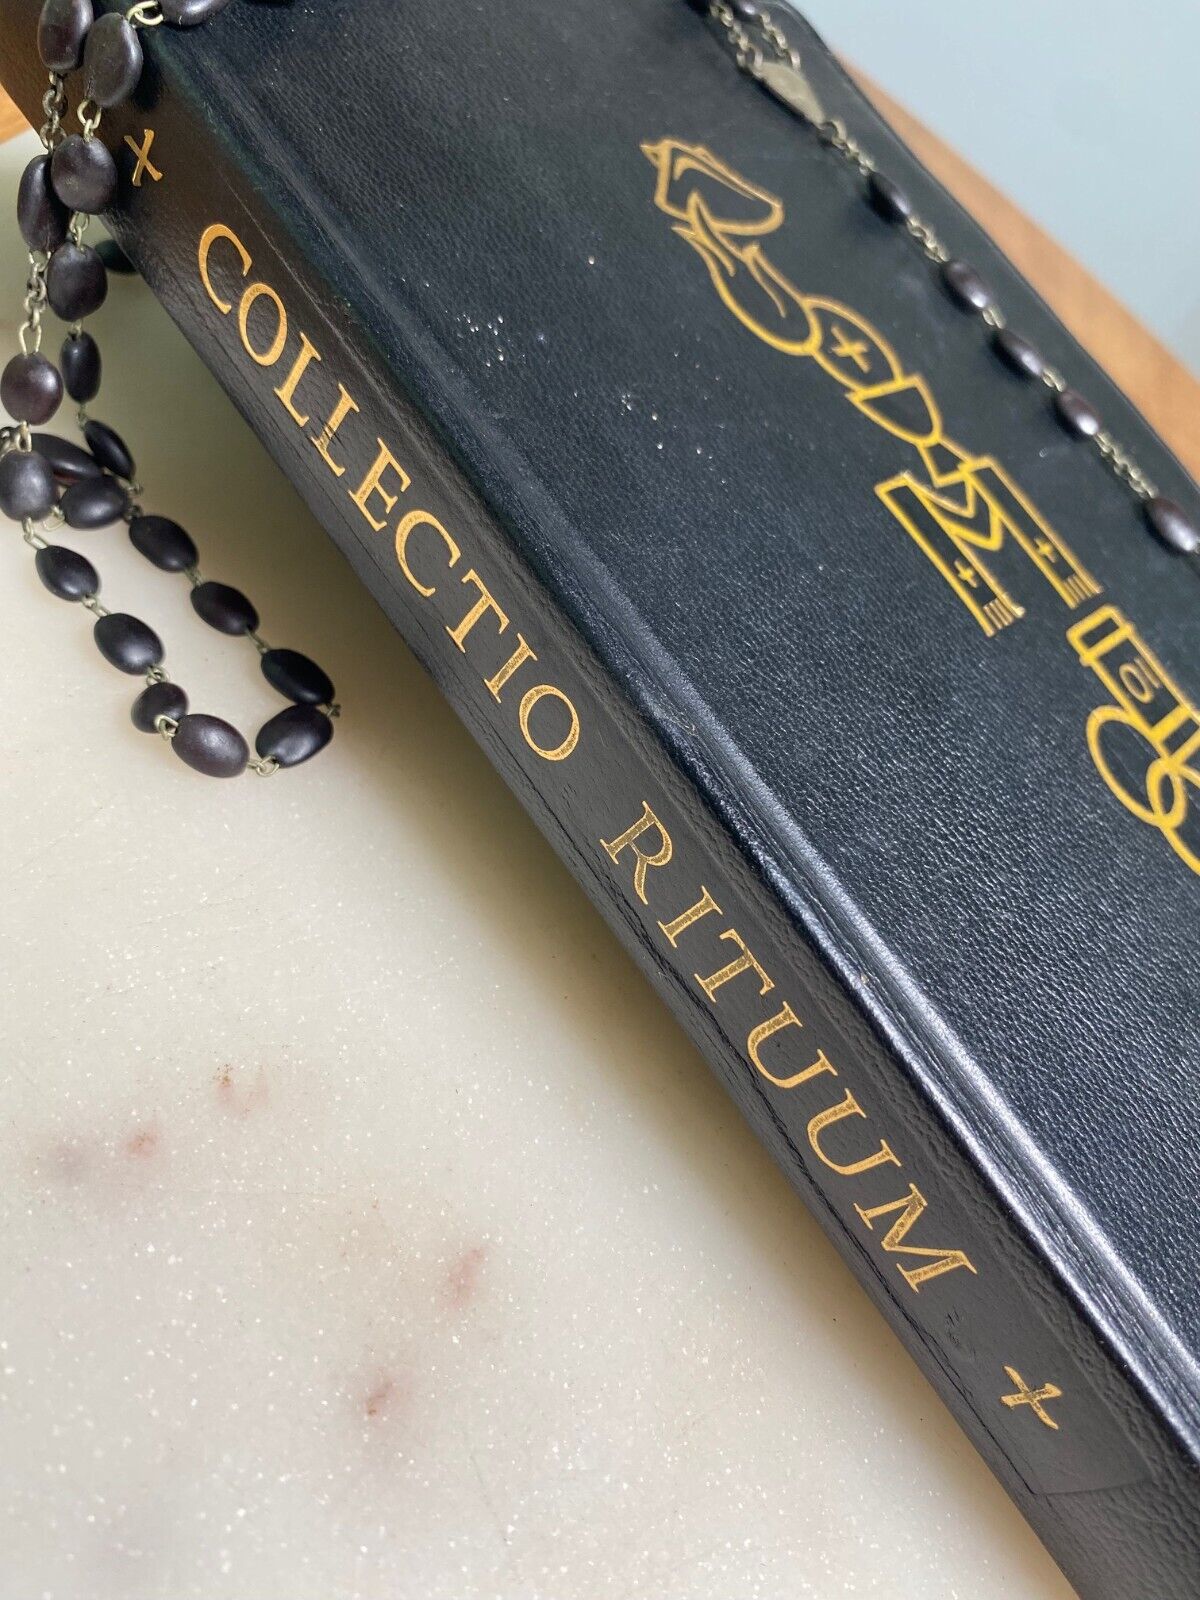 Vintage Catholic Priest book of Rituals & Rosary *VERY RARE*